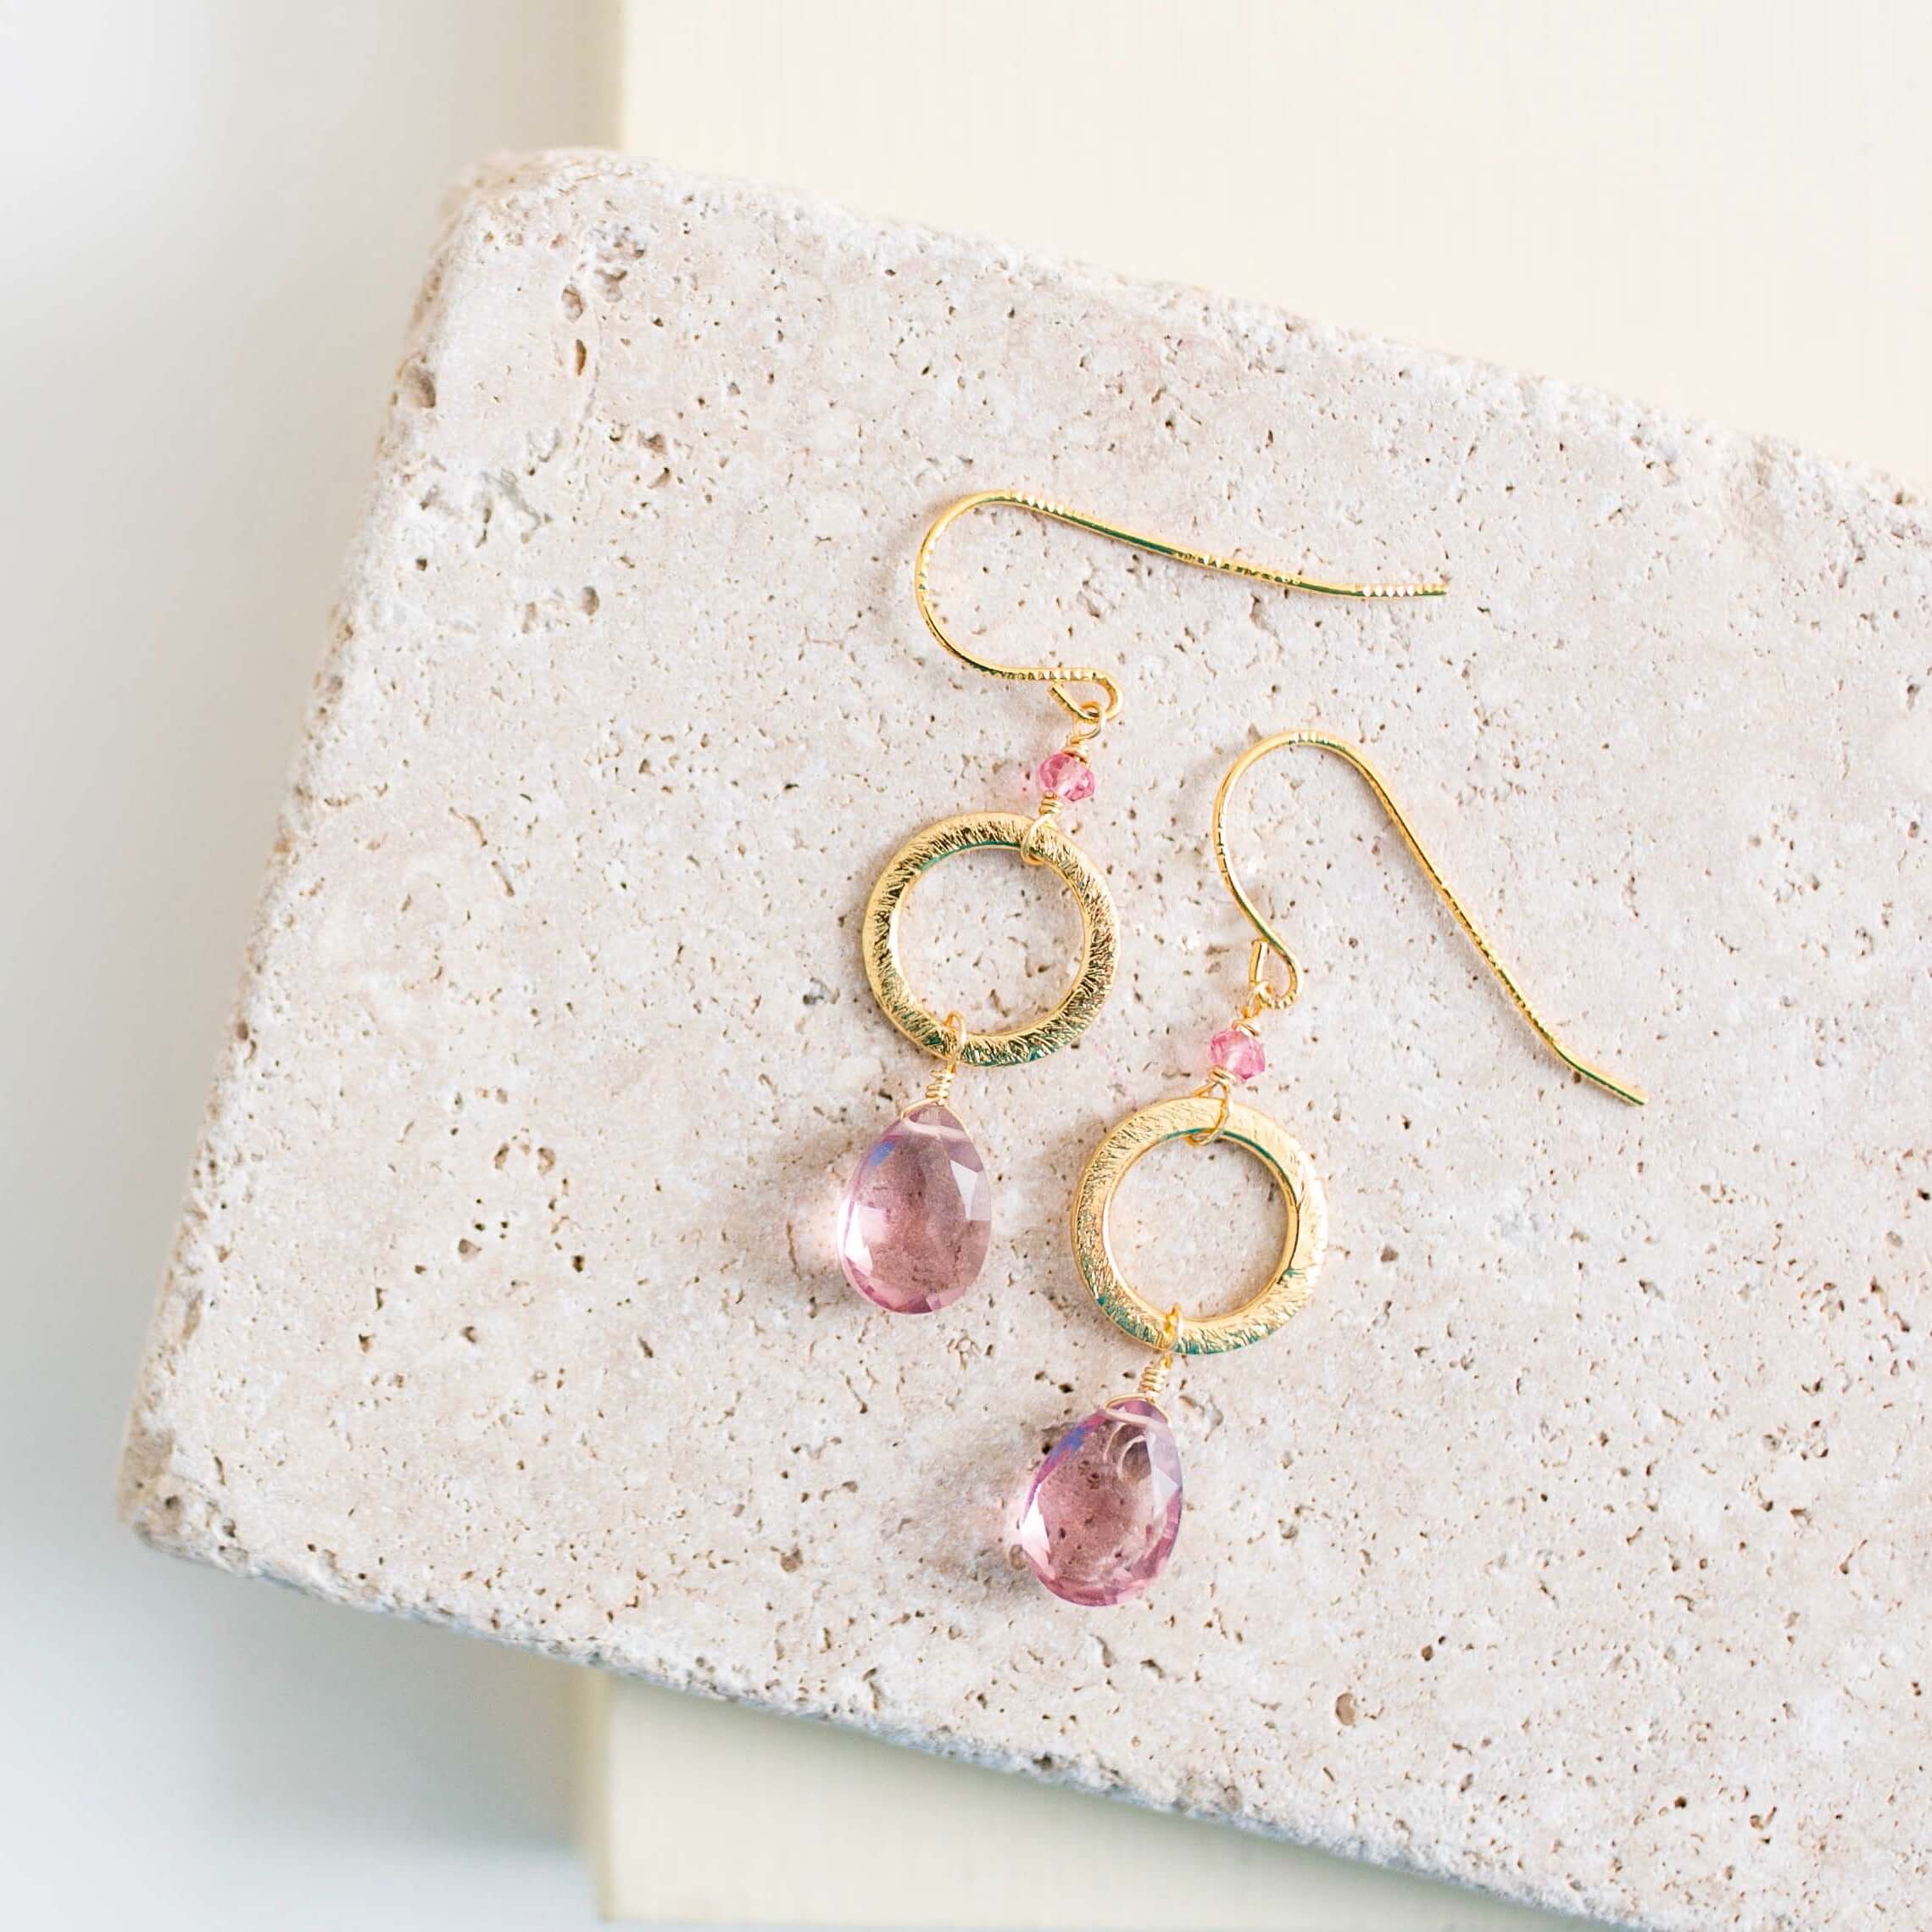 Handmade Gold-Plated Drop Earrings with Pink Garnet